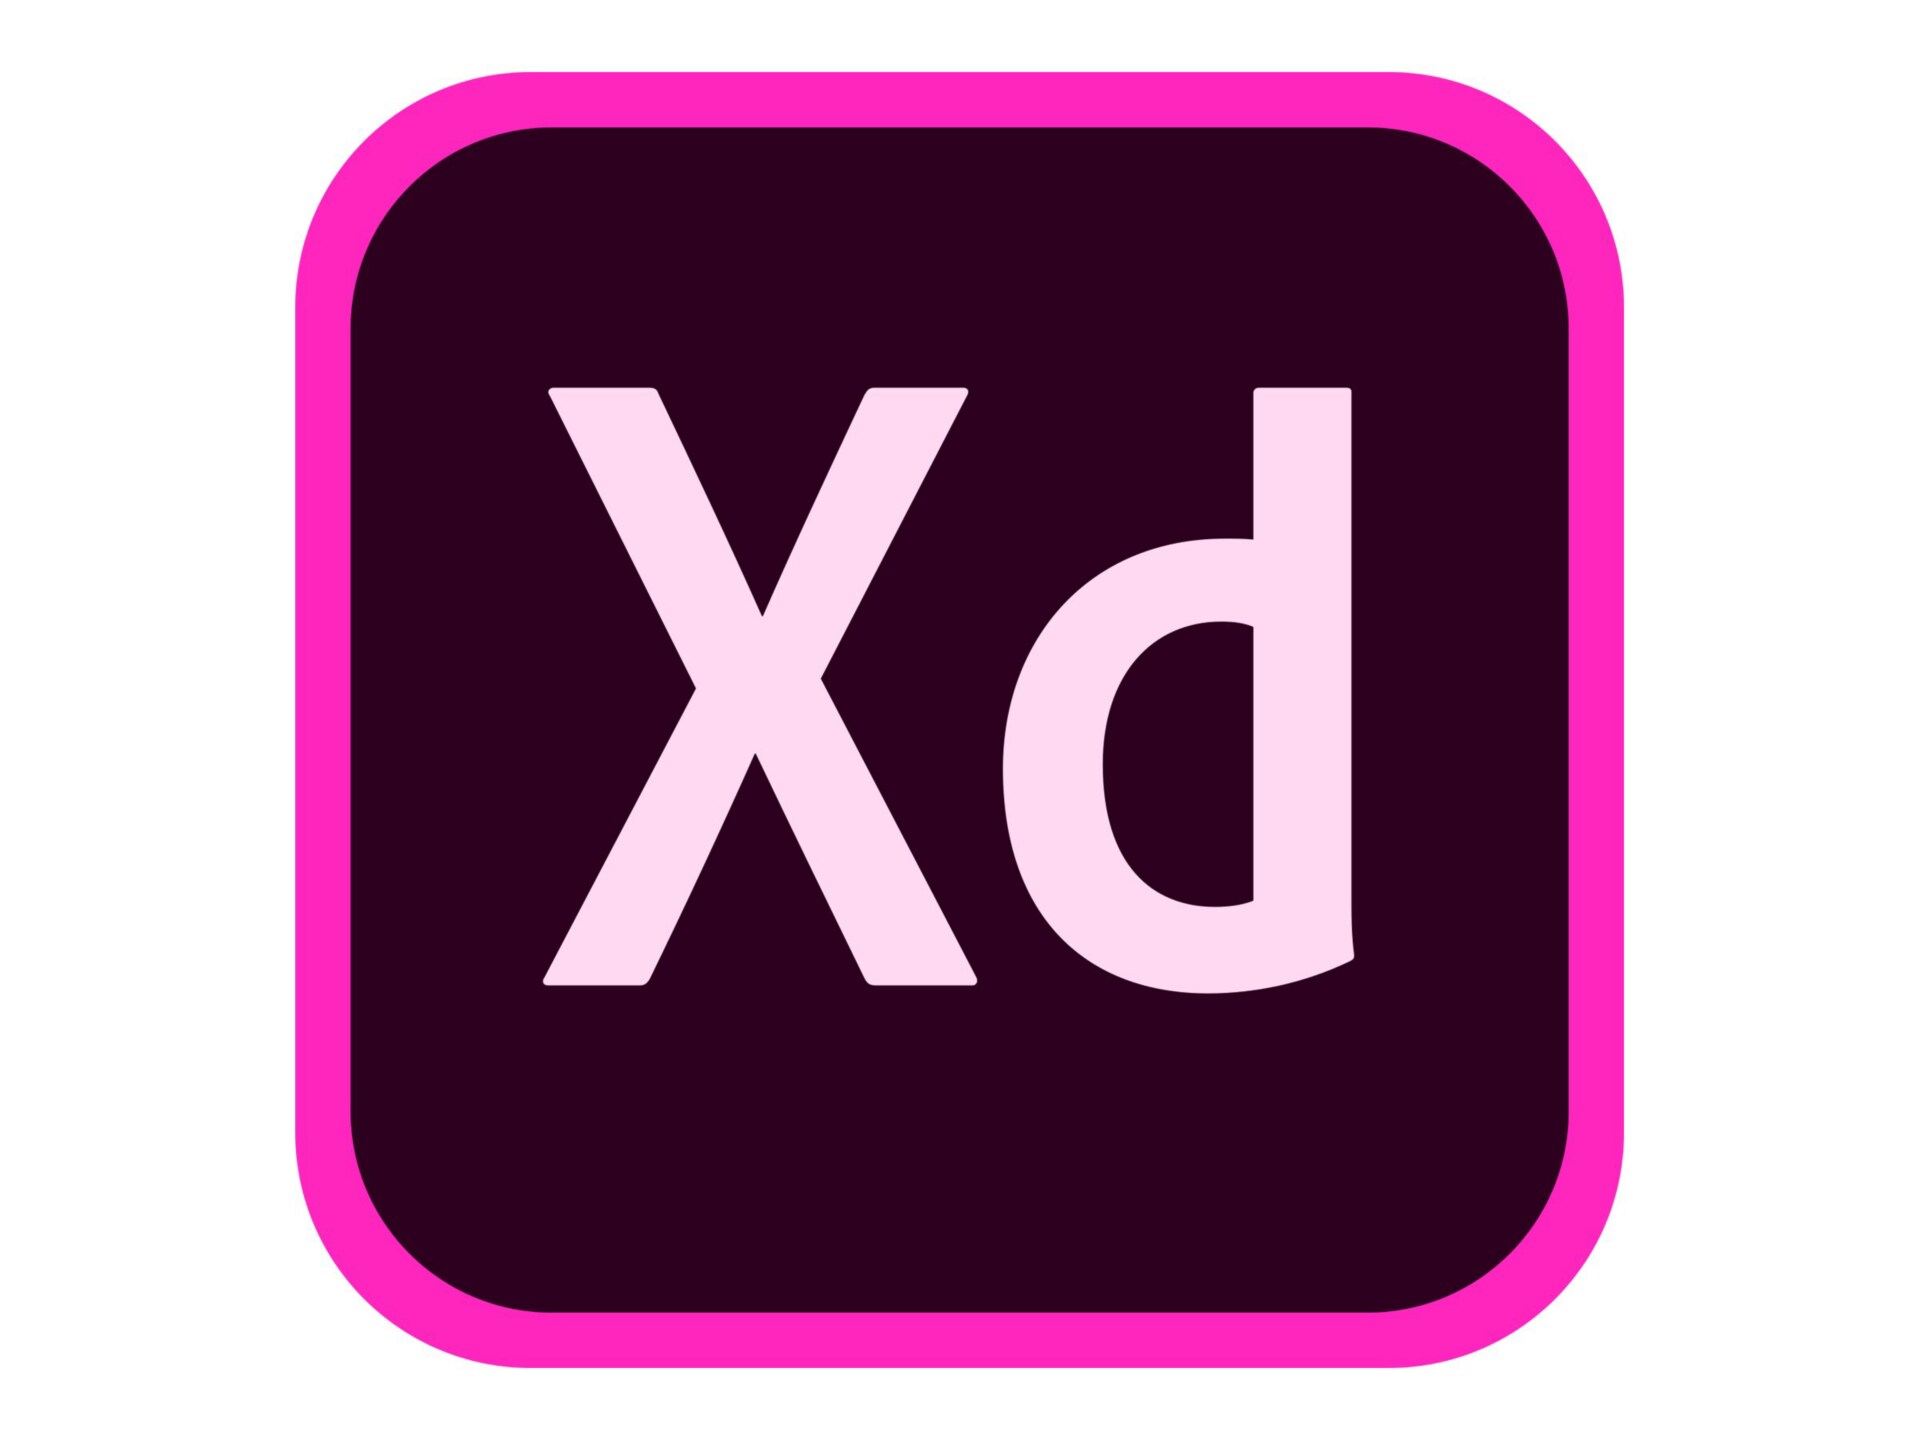 Adobe XD CC for Enterprise - Subscription New (7 months) - 1 user